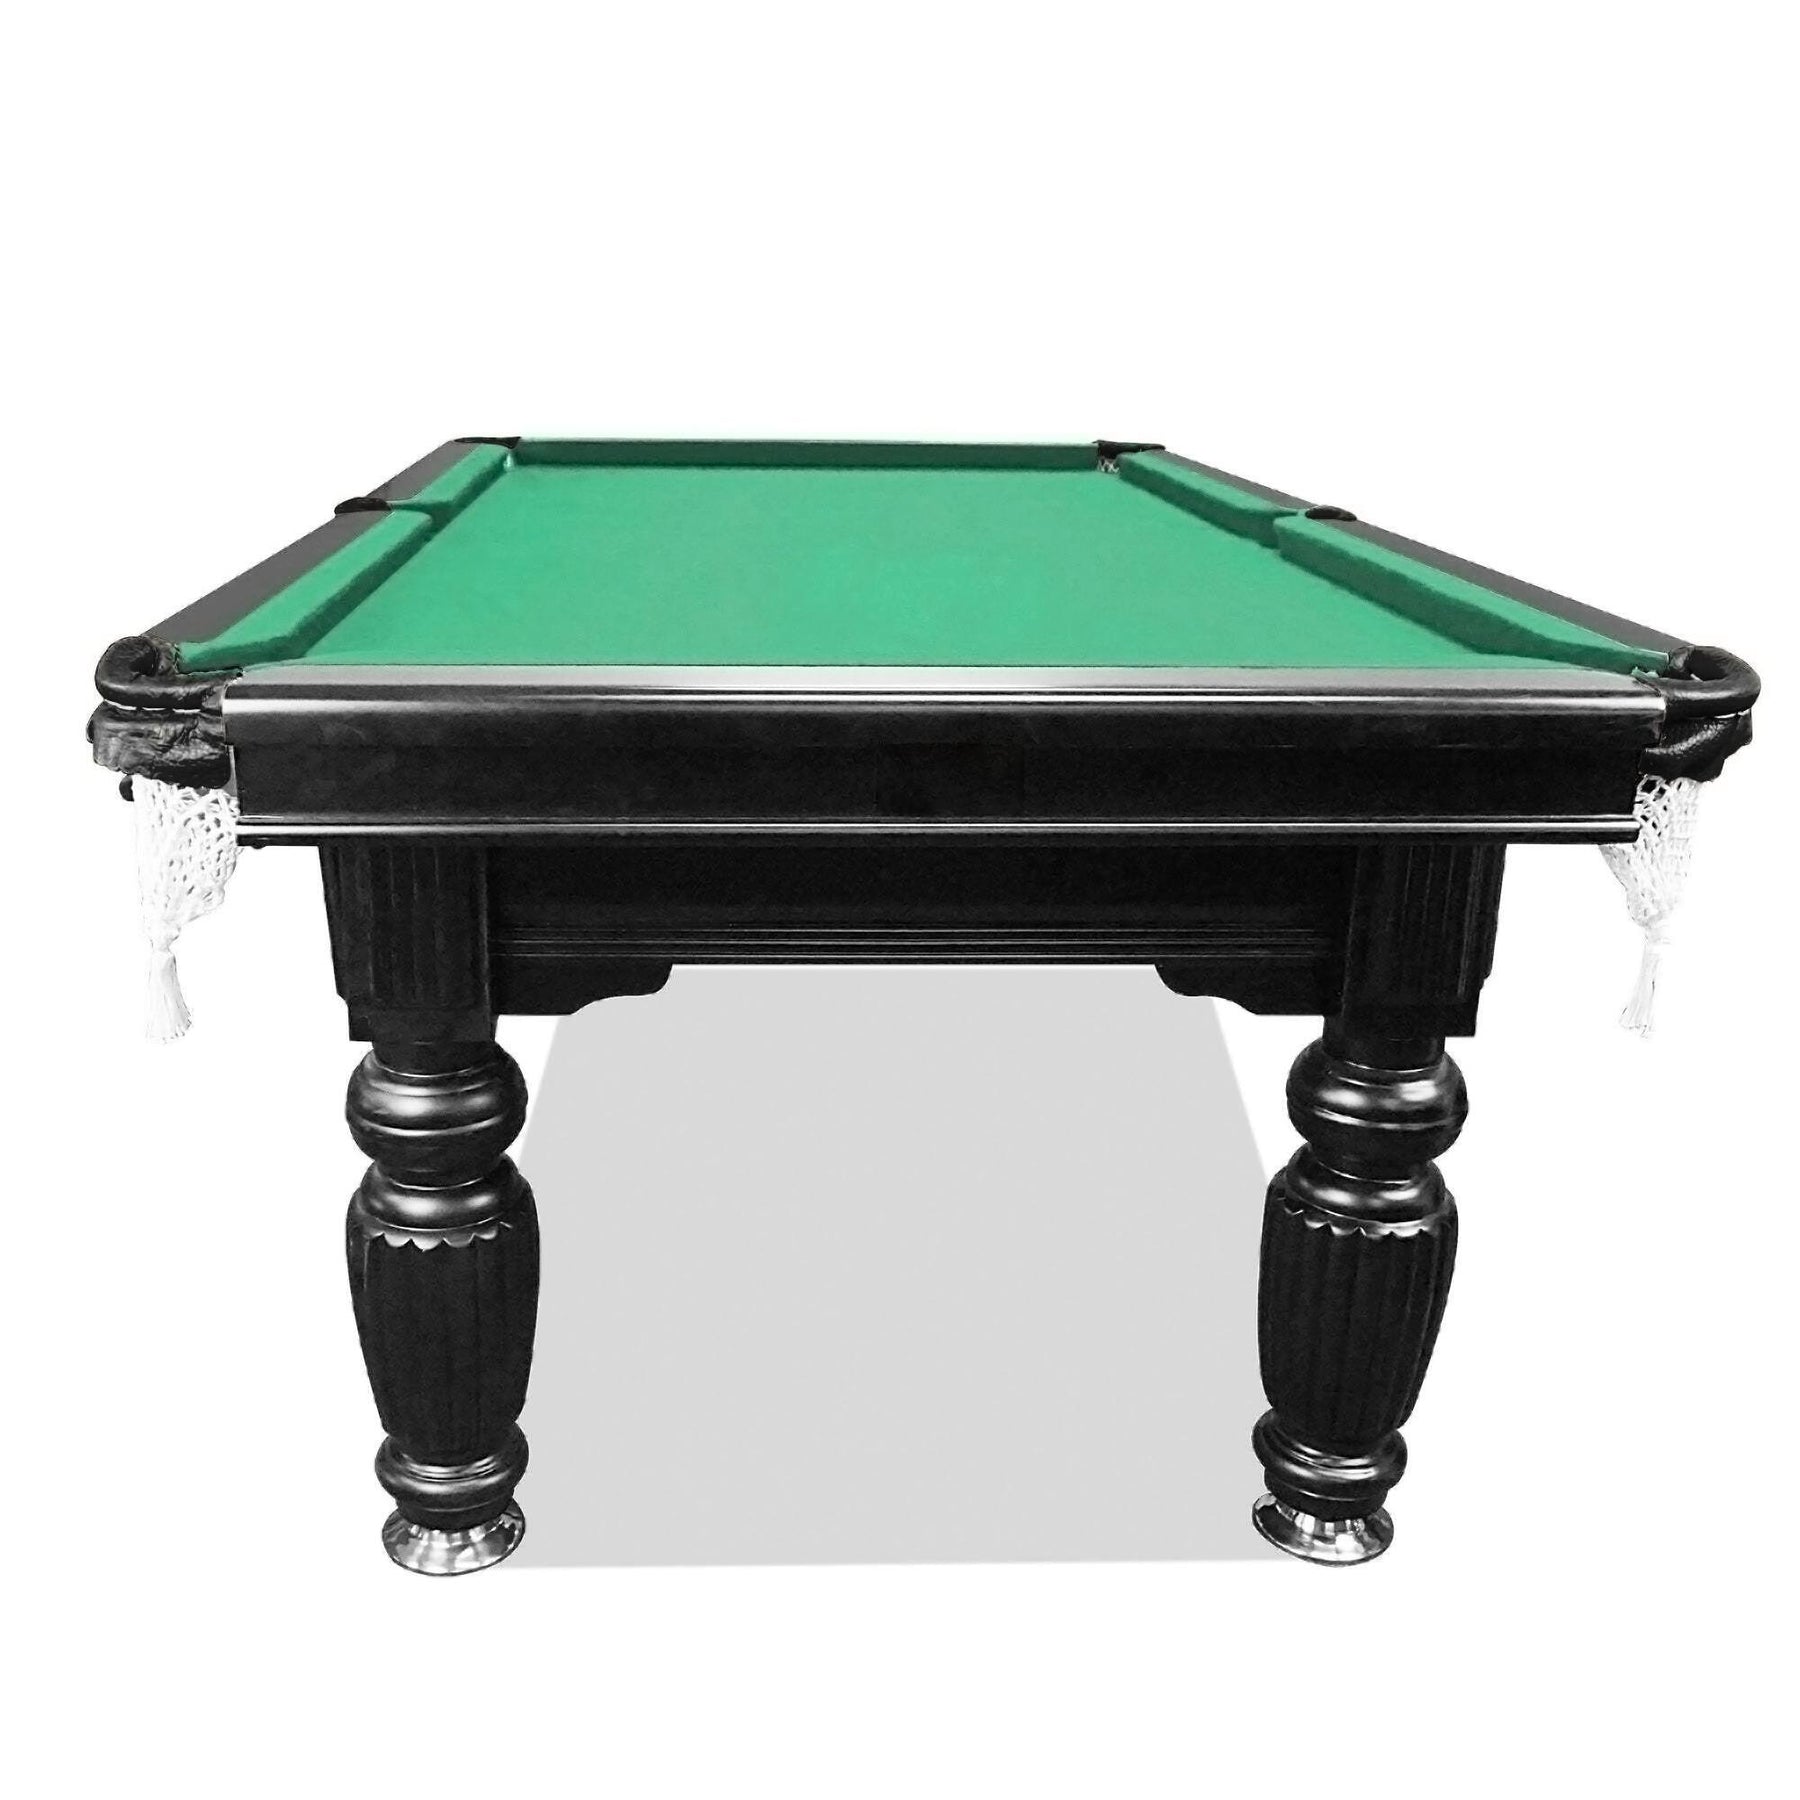 Pool Table - Classic 7ft Slate Pool/Billiards Table - Black Frame (ON BACK ORDER IN 2 WEEKS)